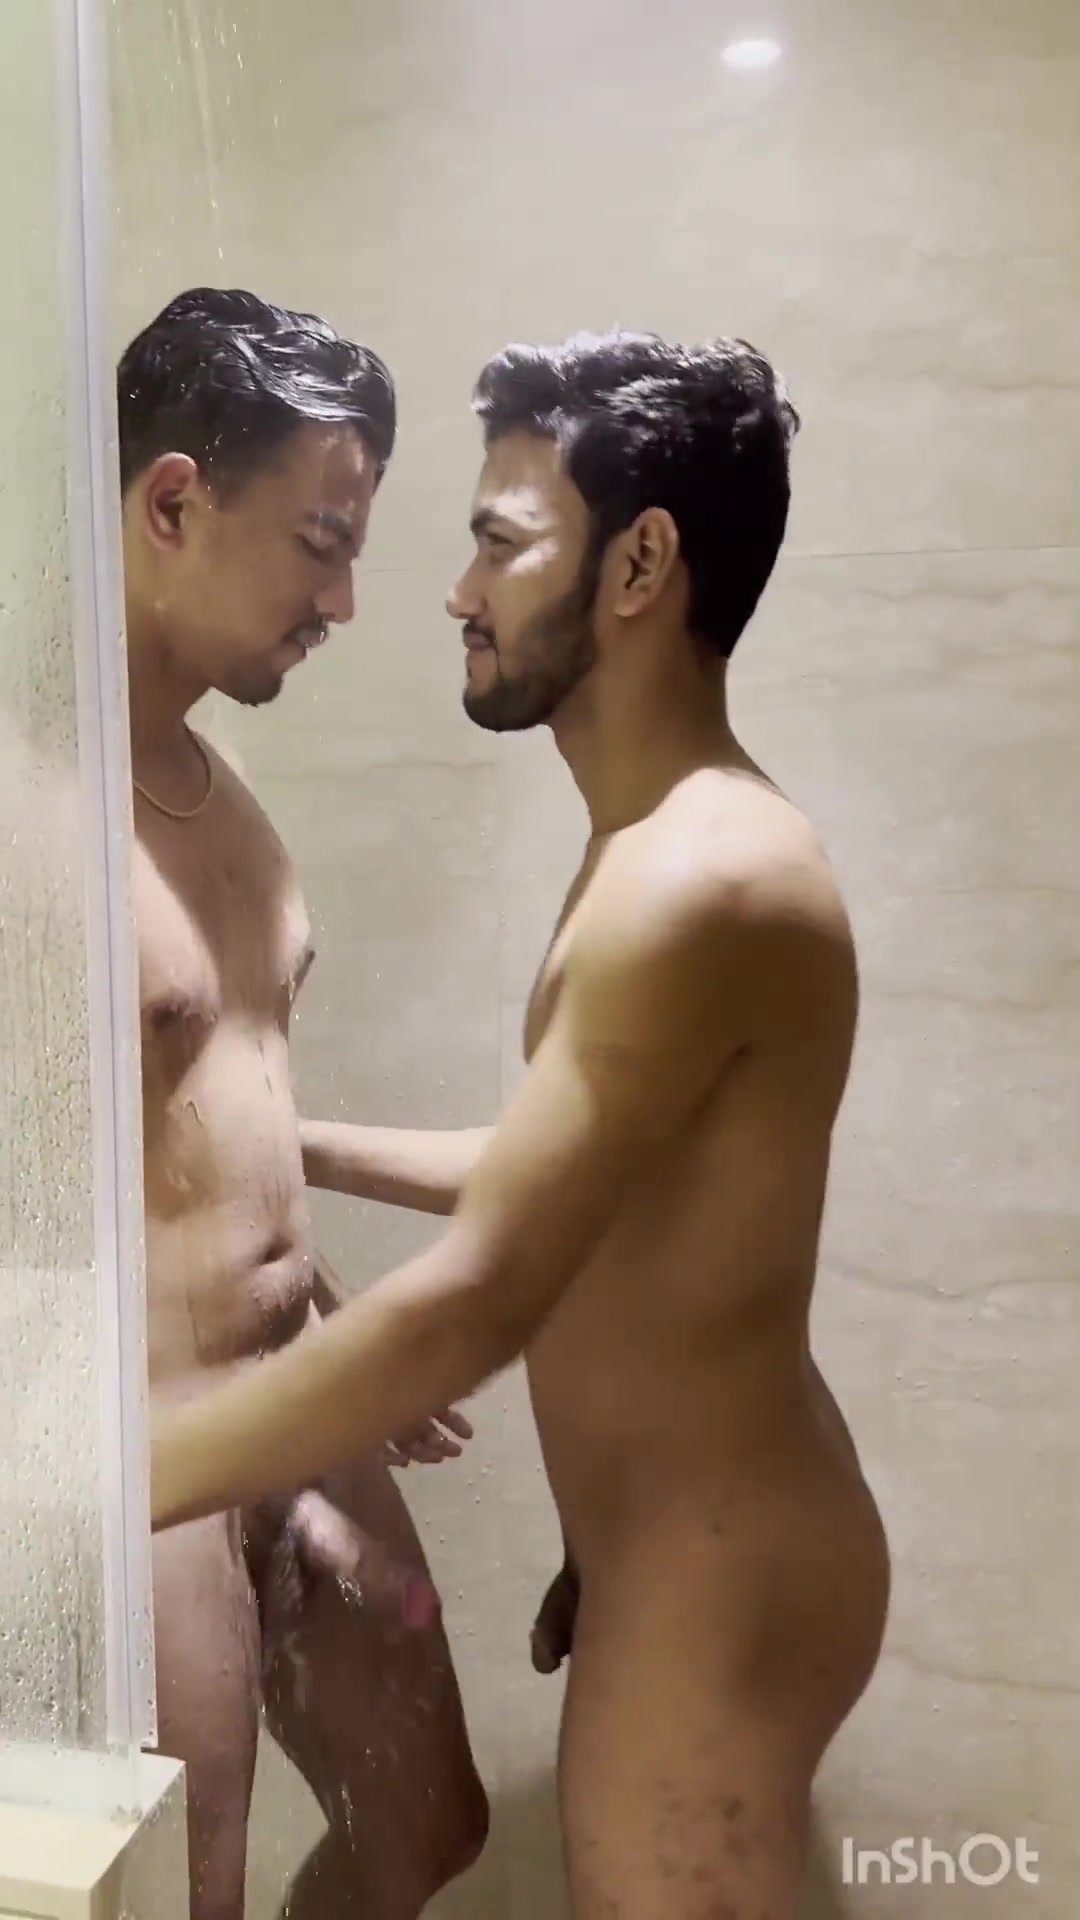 Cute desi guys in shower